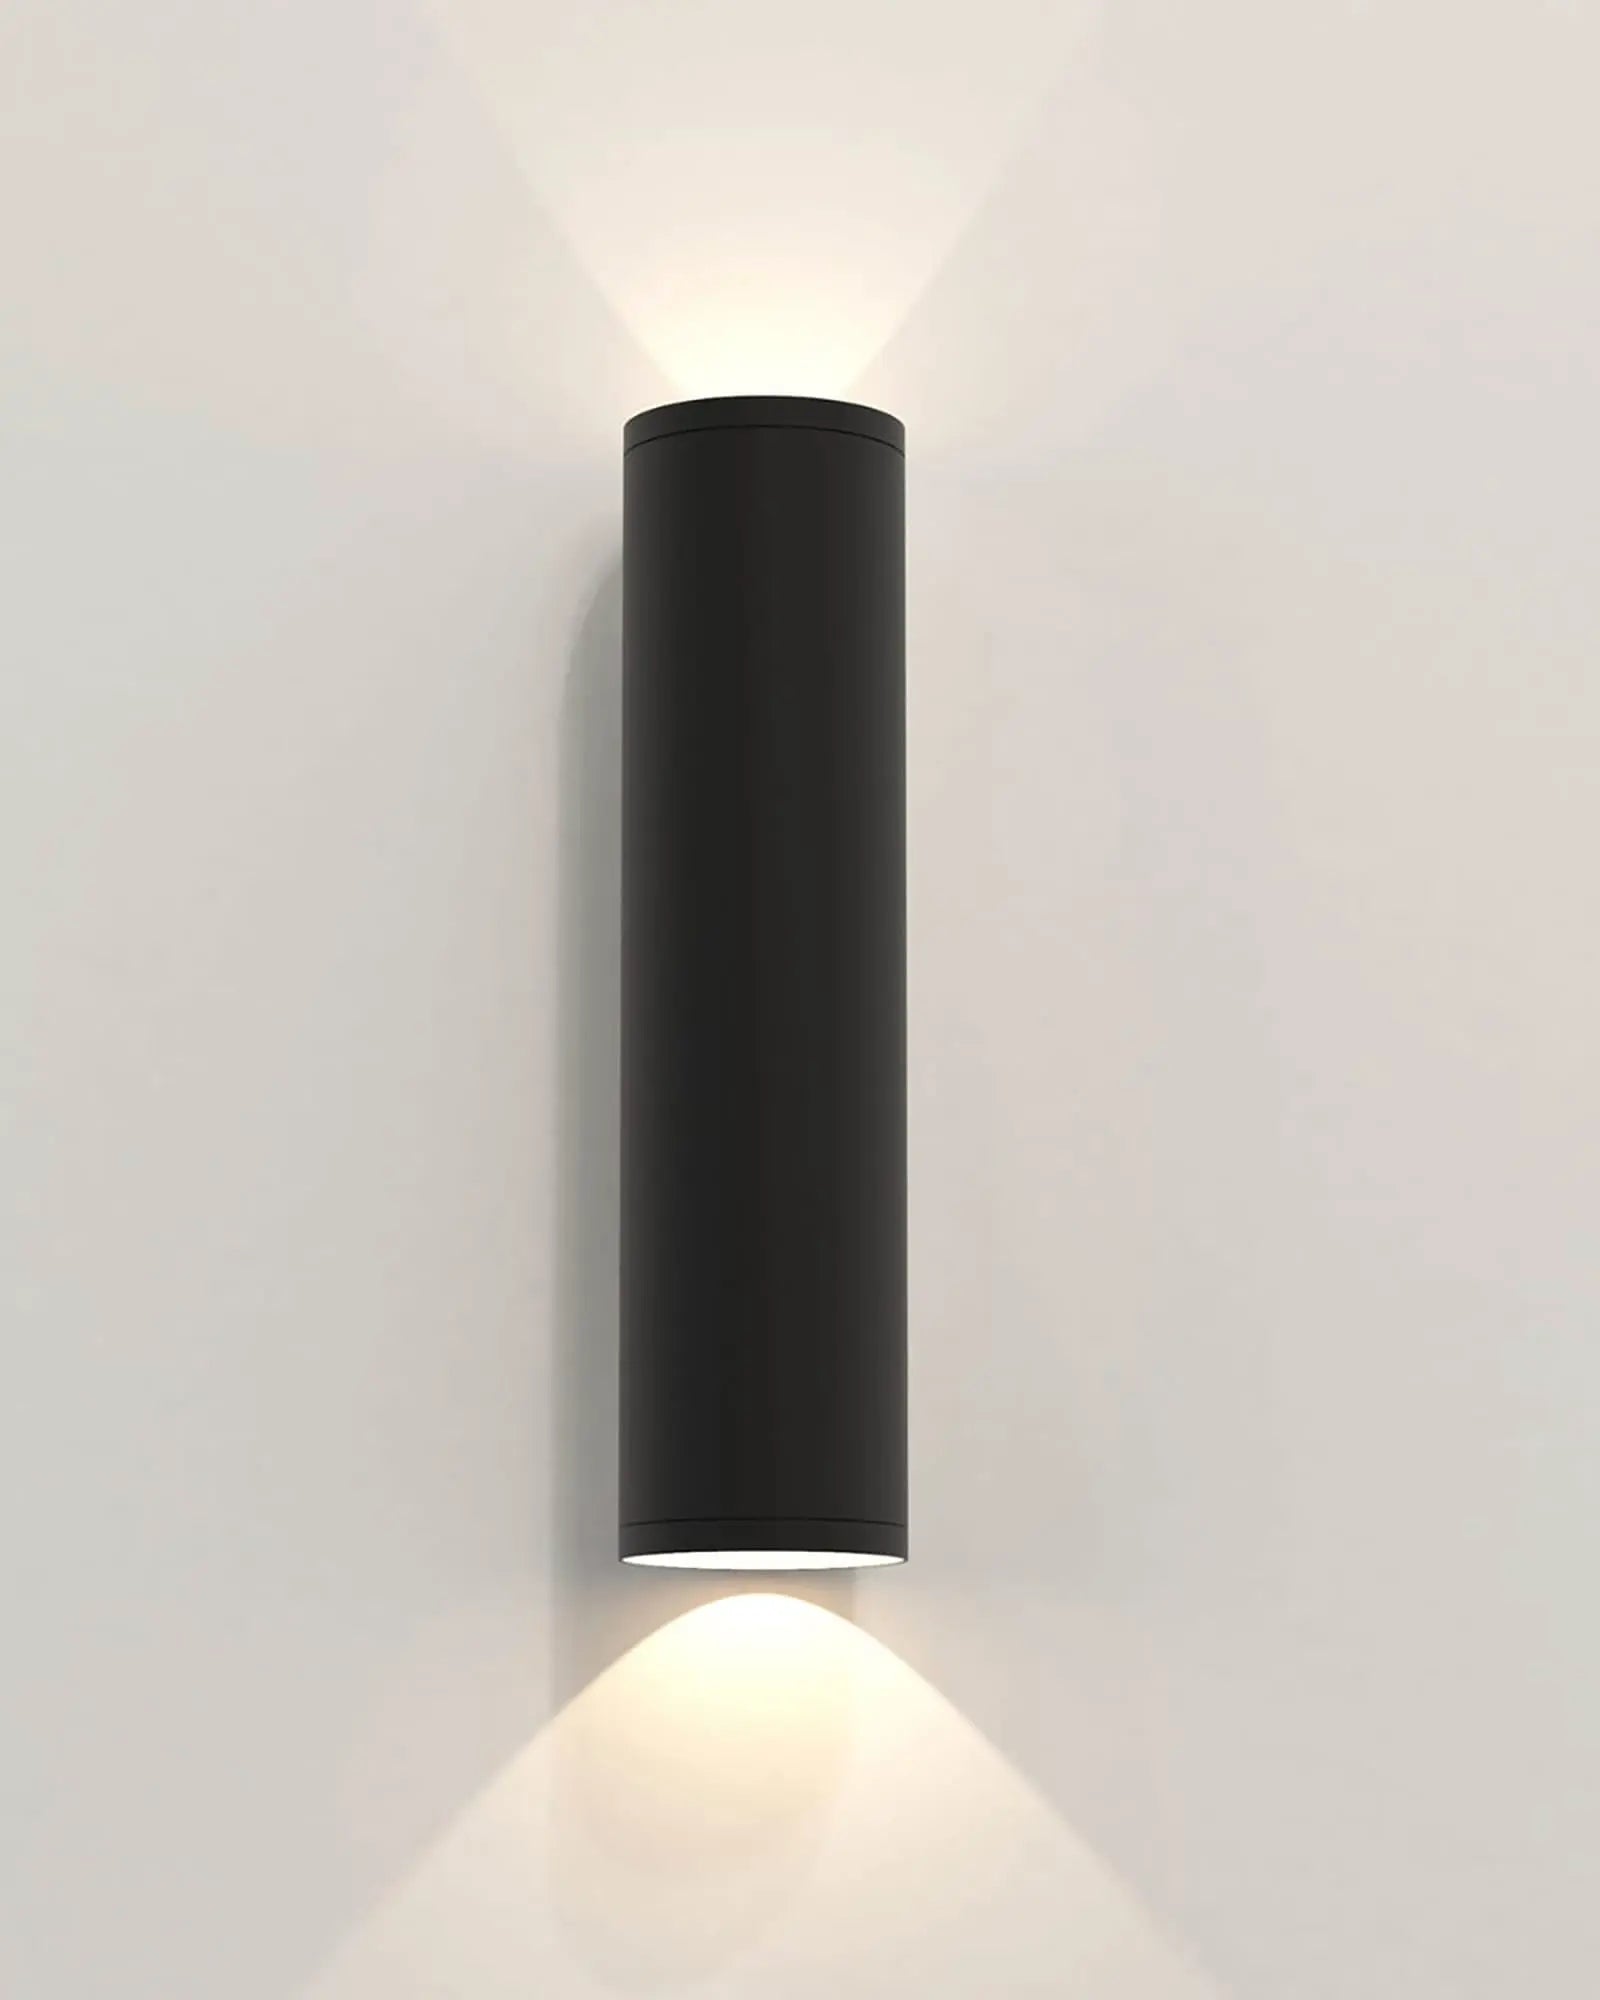 Aba minimalistic cylinder outdoor wall light black medium